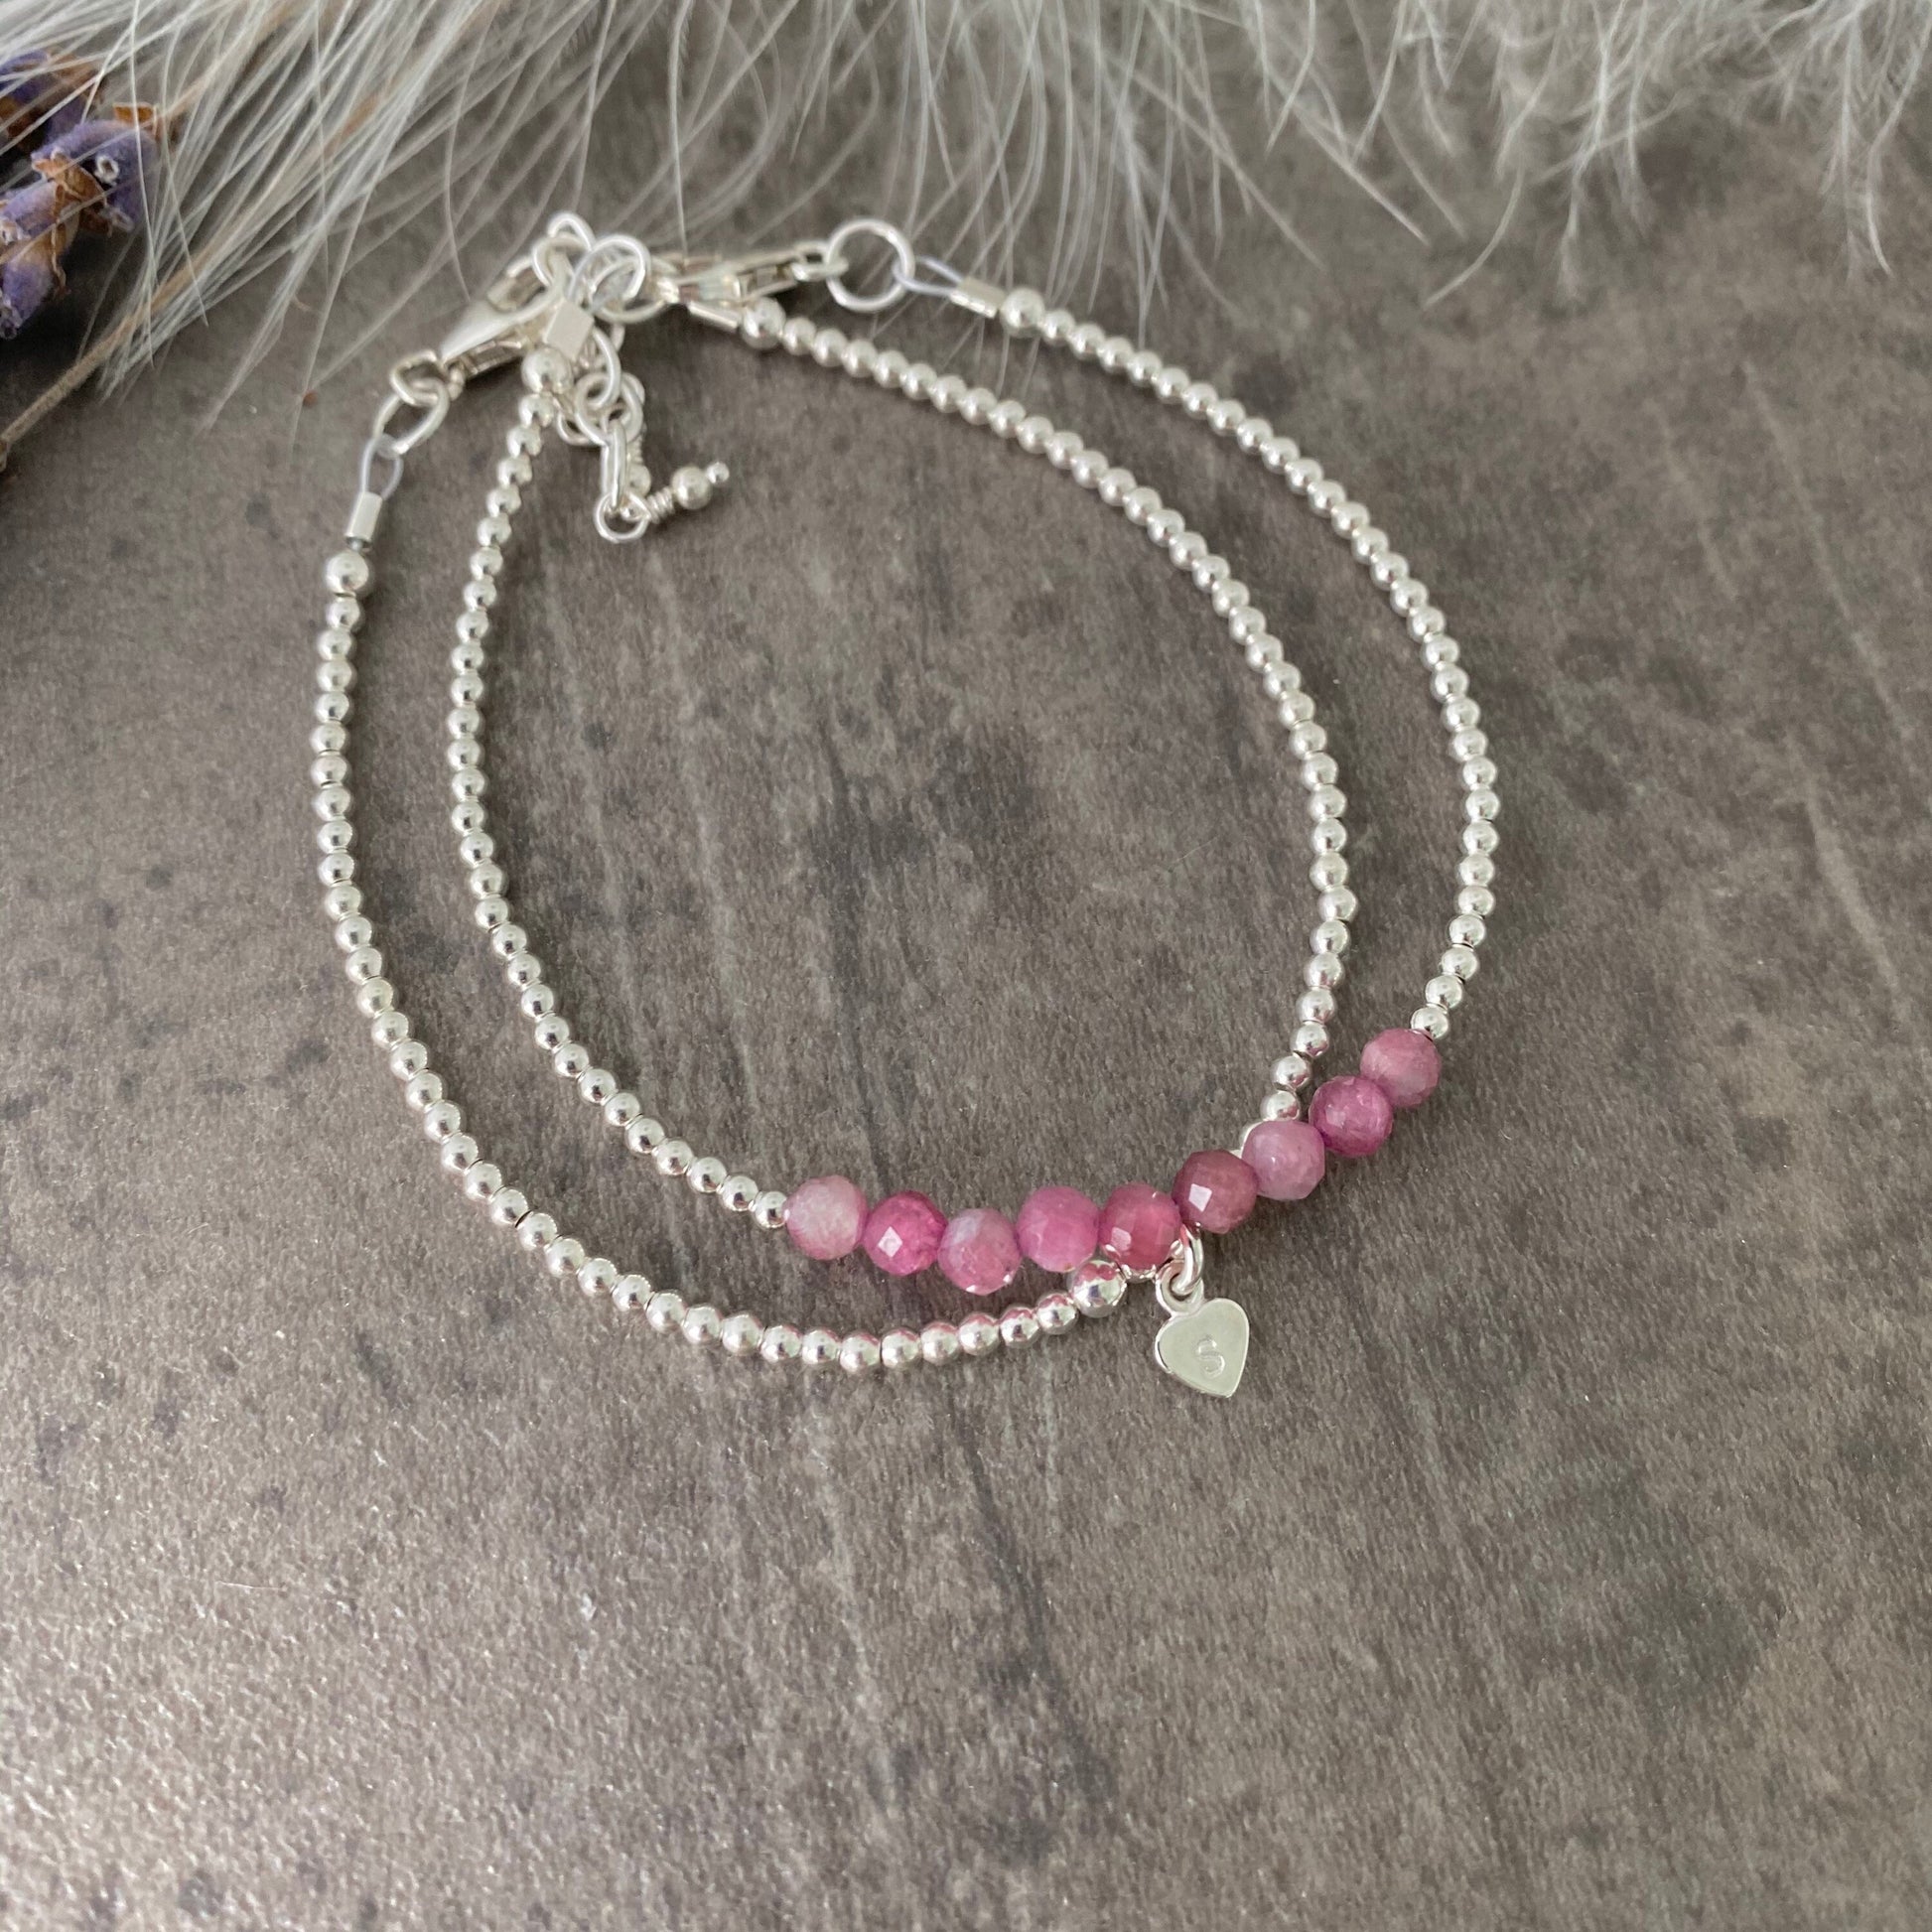 Personalised Pink Tourmaline Bracelet Set, October Birthstone Jewellery